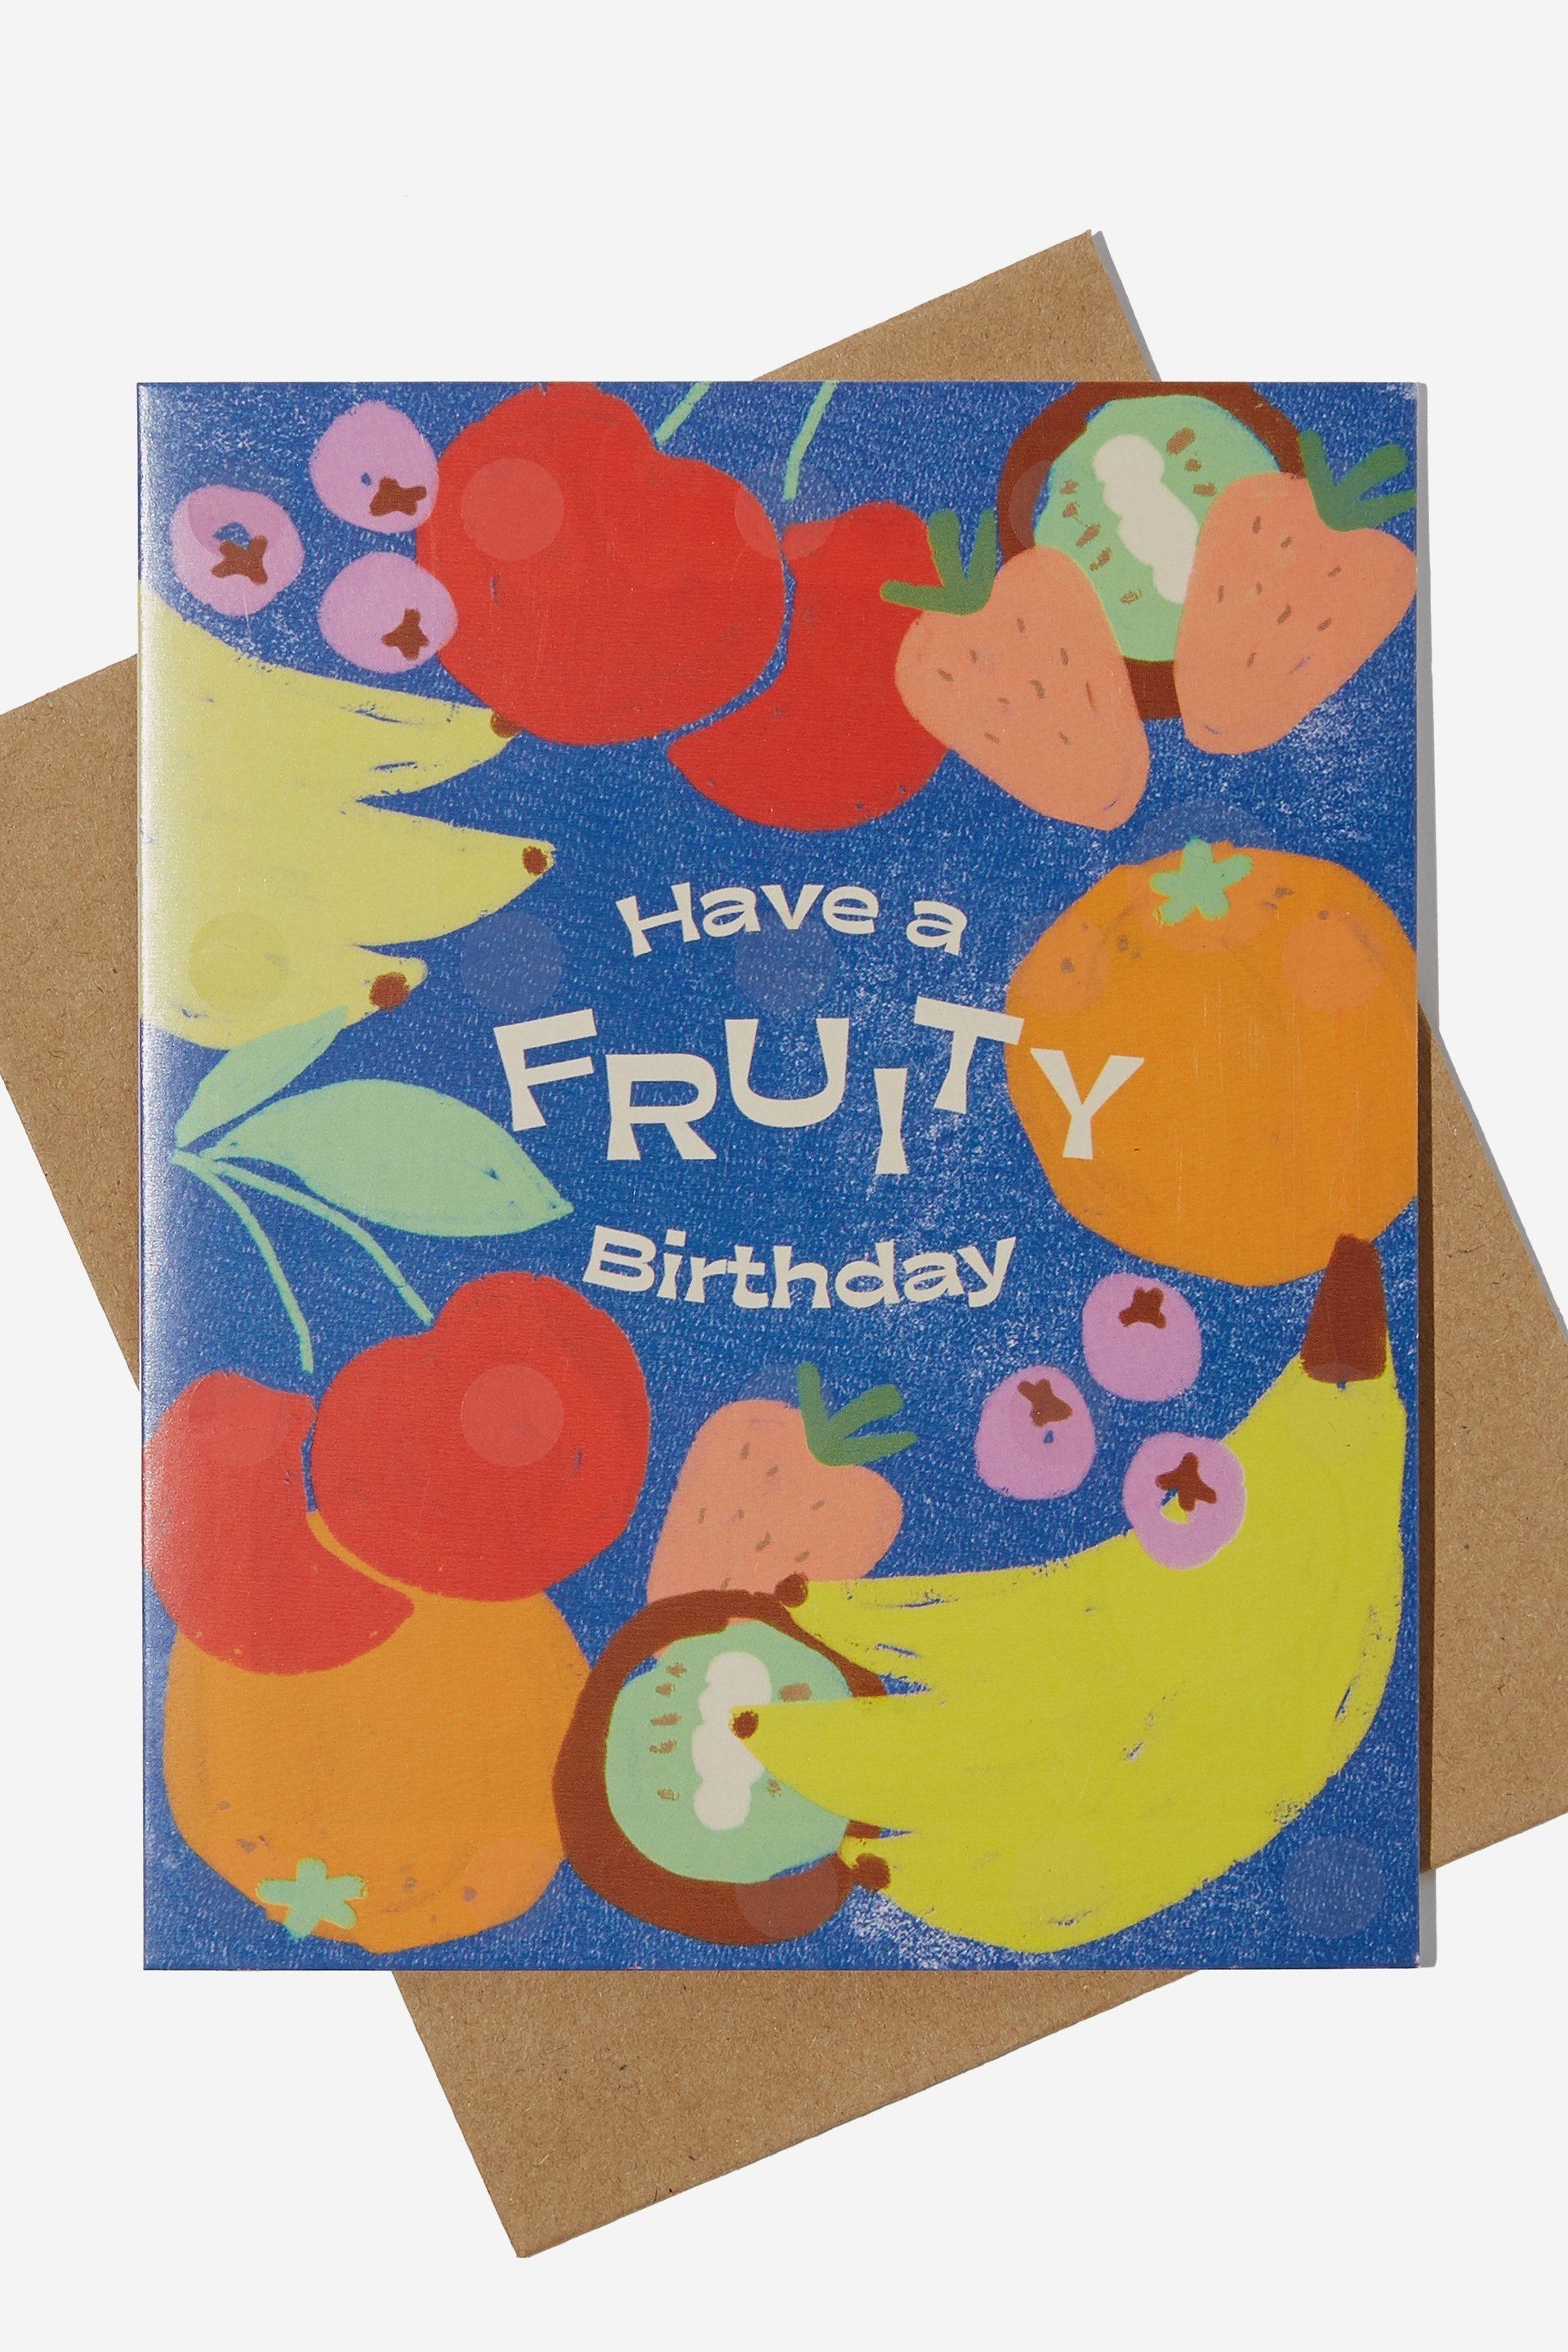 Typo - Premium Nice Birthday Card - Scented fruity birthday